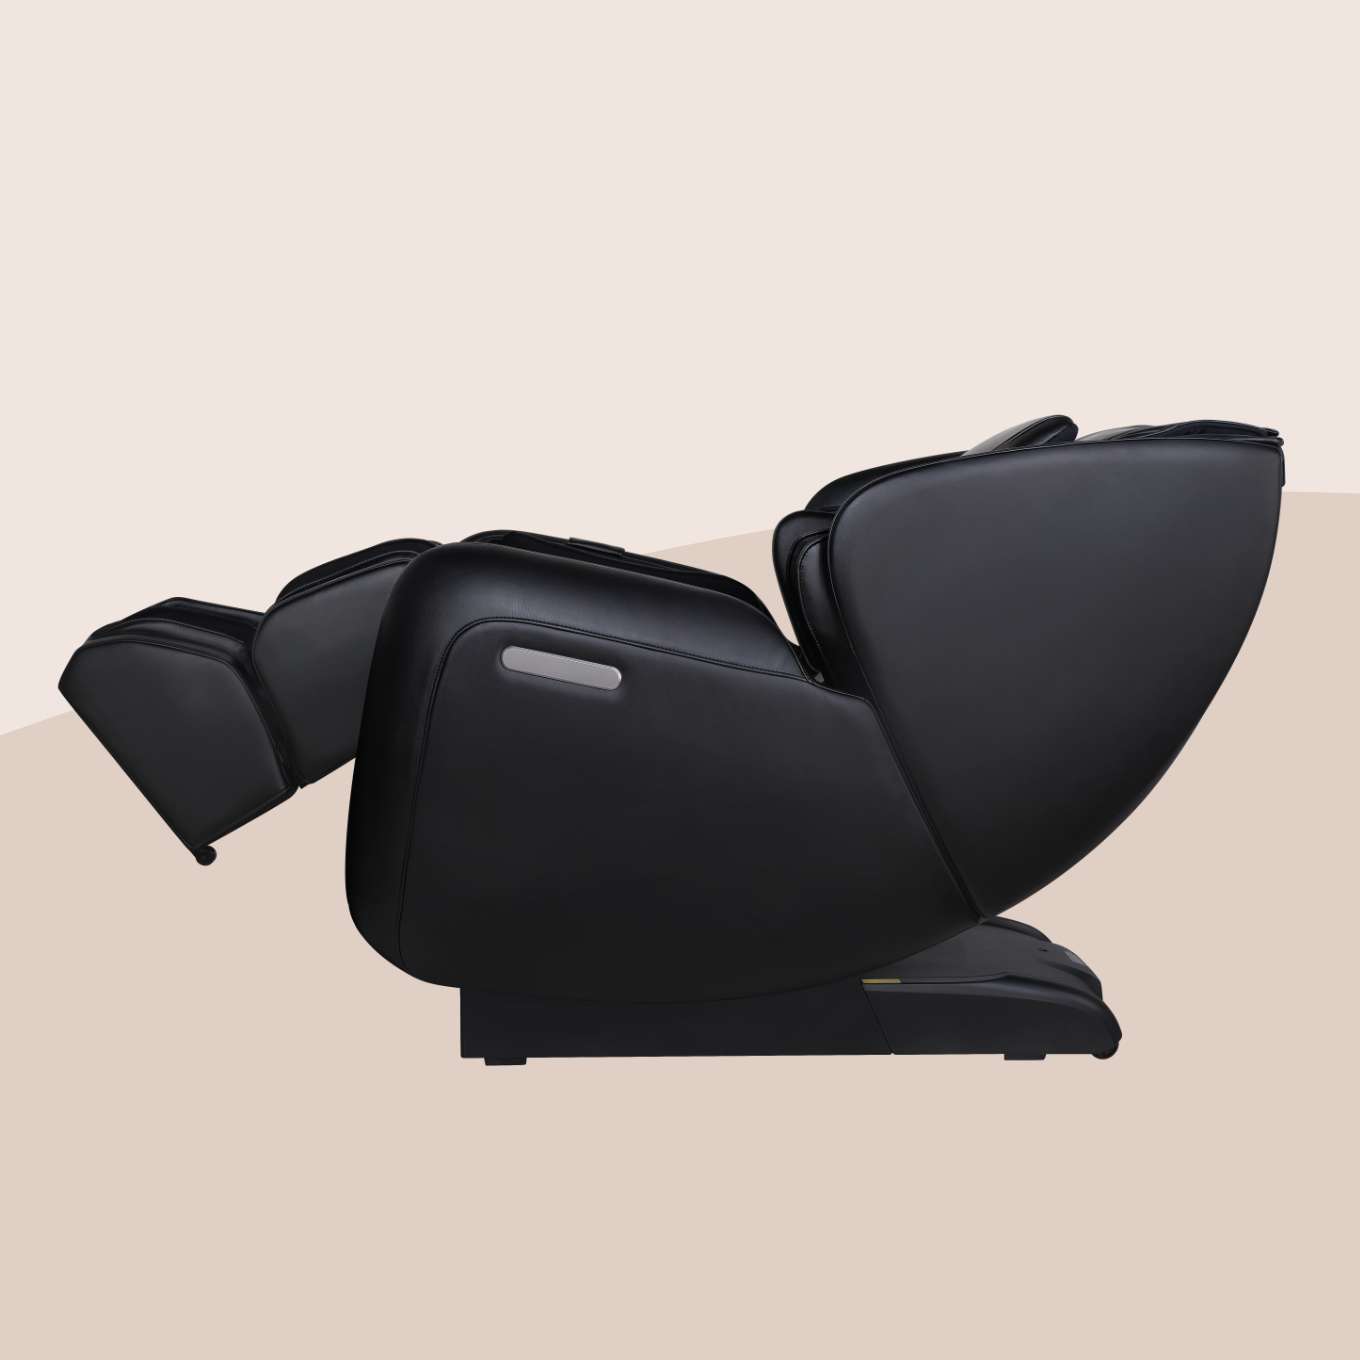 inSpire Massage Chair